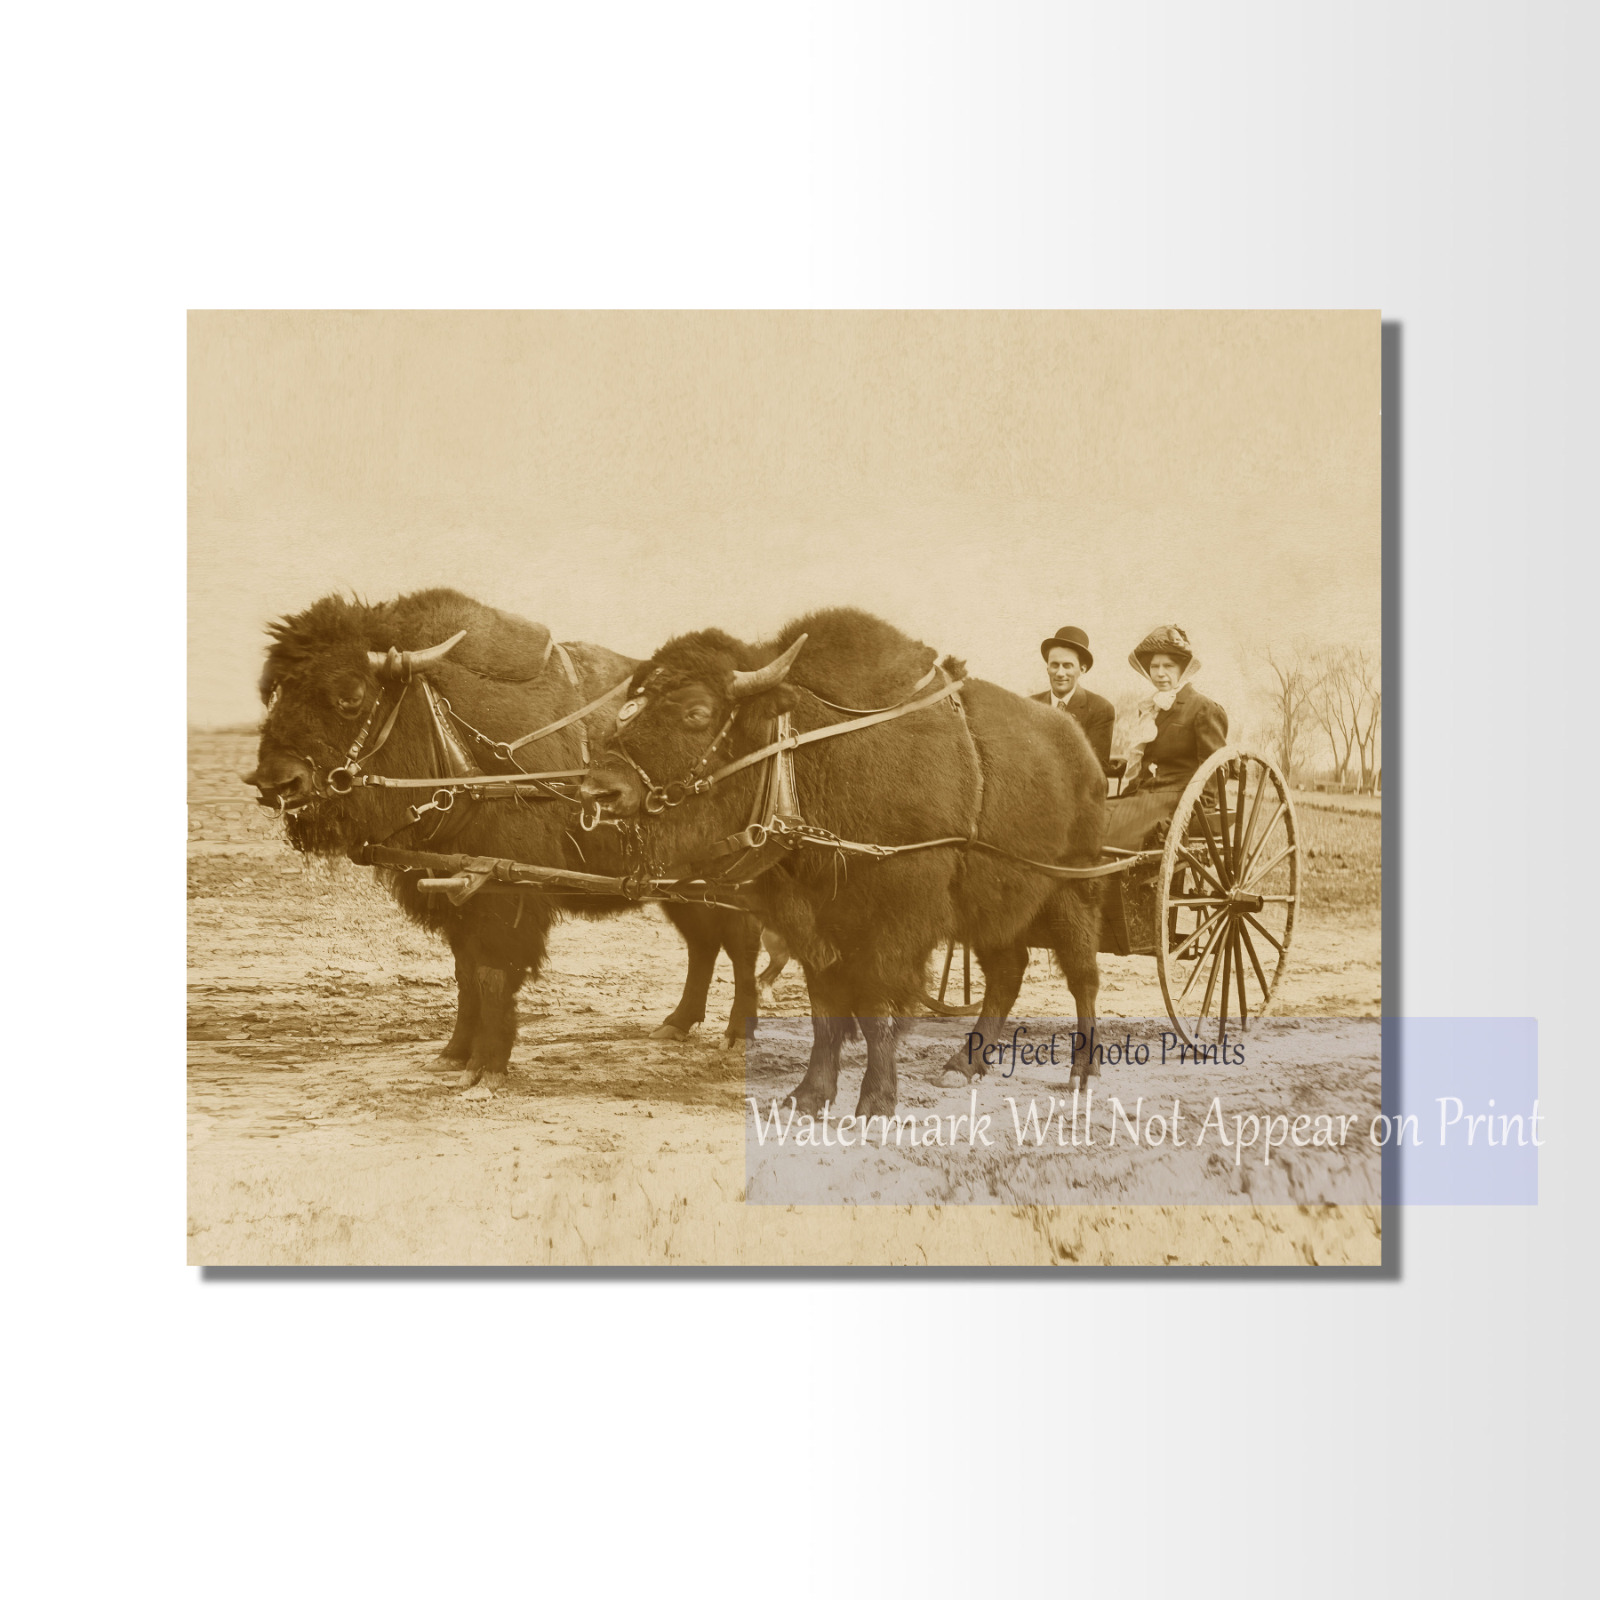 Vintage Bison-Pulled Cart Photo Print - Early 1900s Western Print